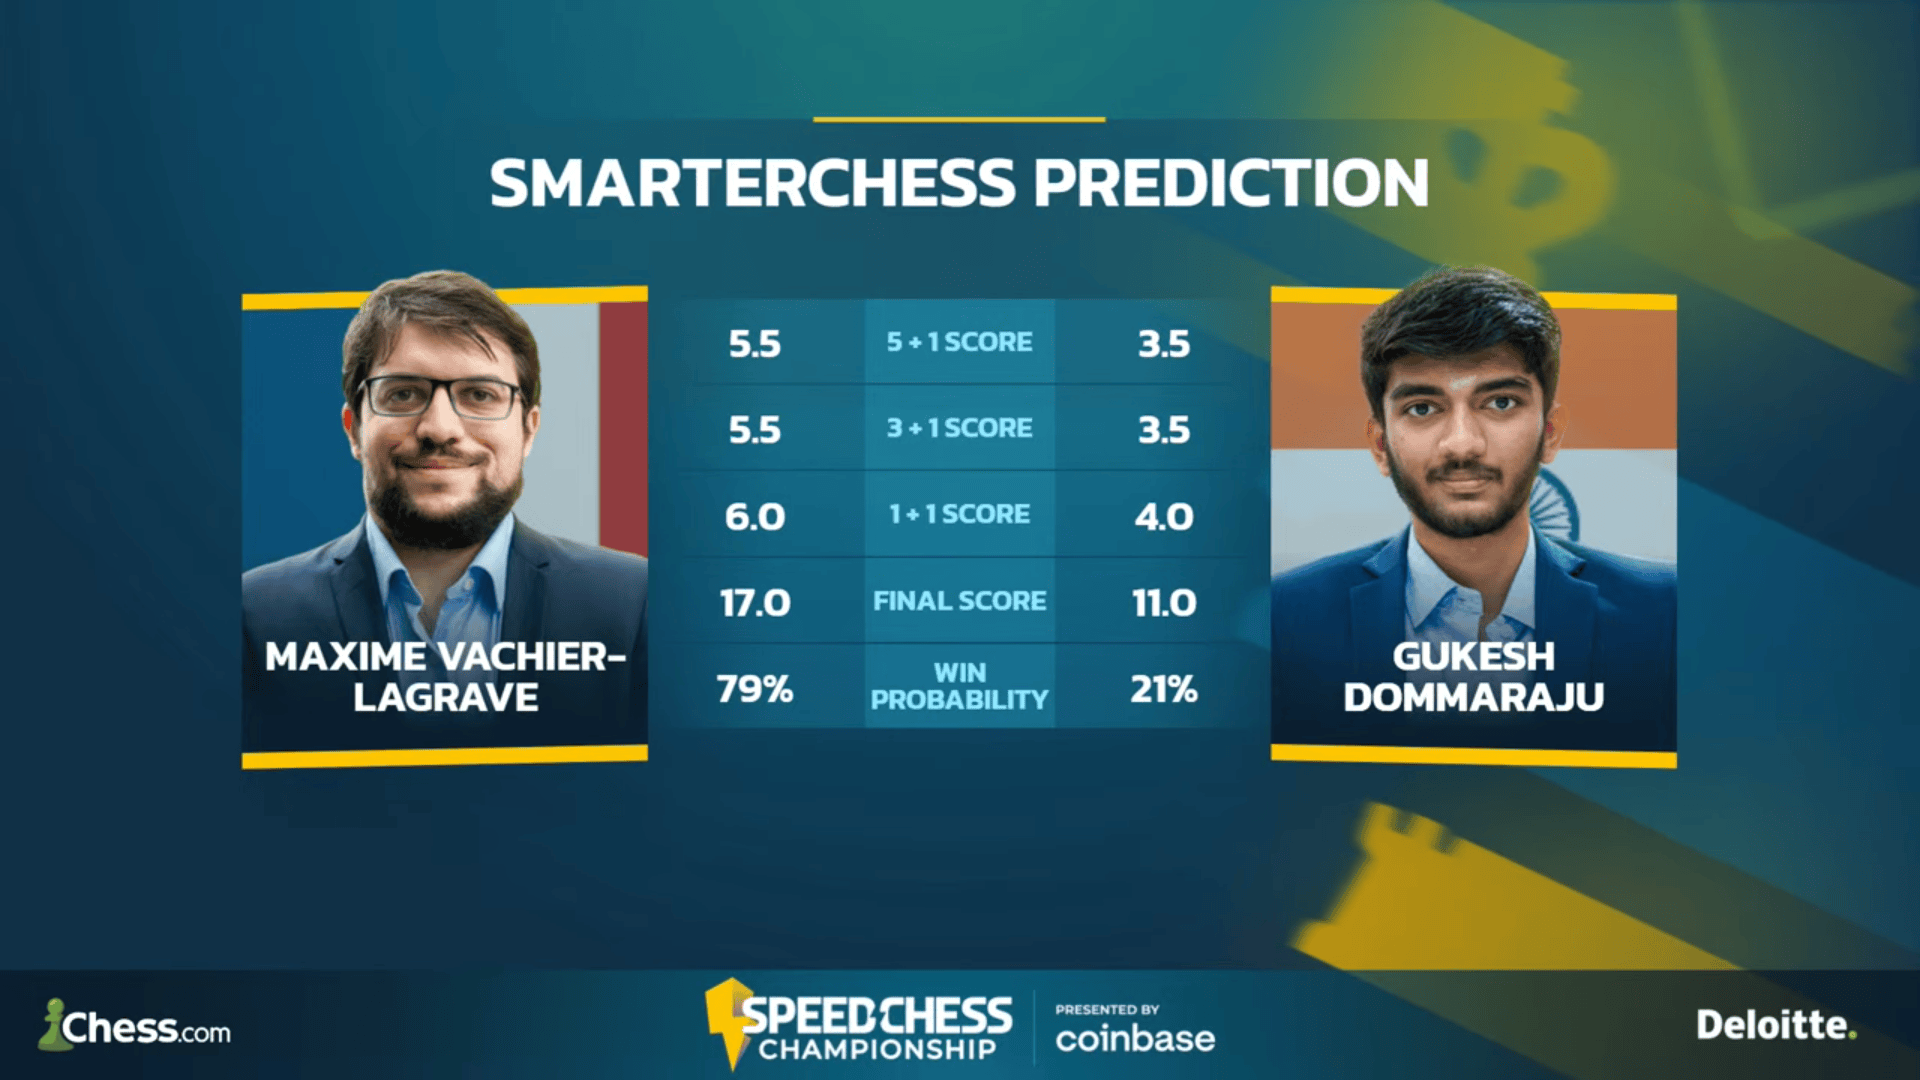 Magnus Carlsen v. Vidit Gujrathi / Oitavas de final / Speed Chess  Championship 2023 